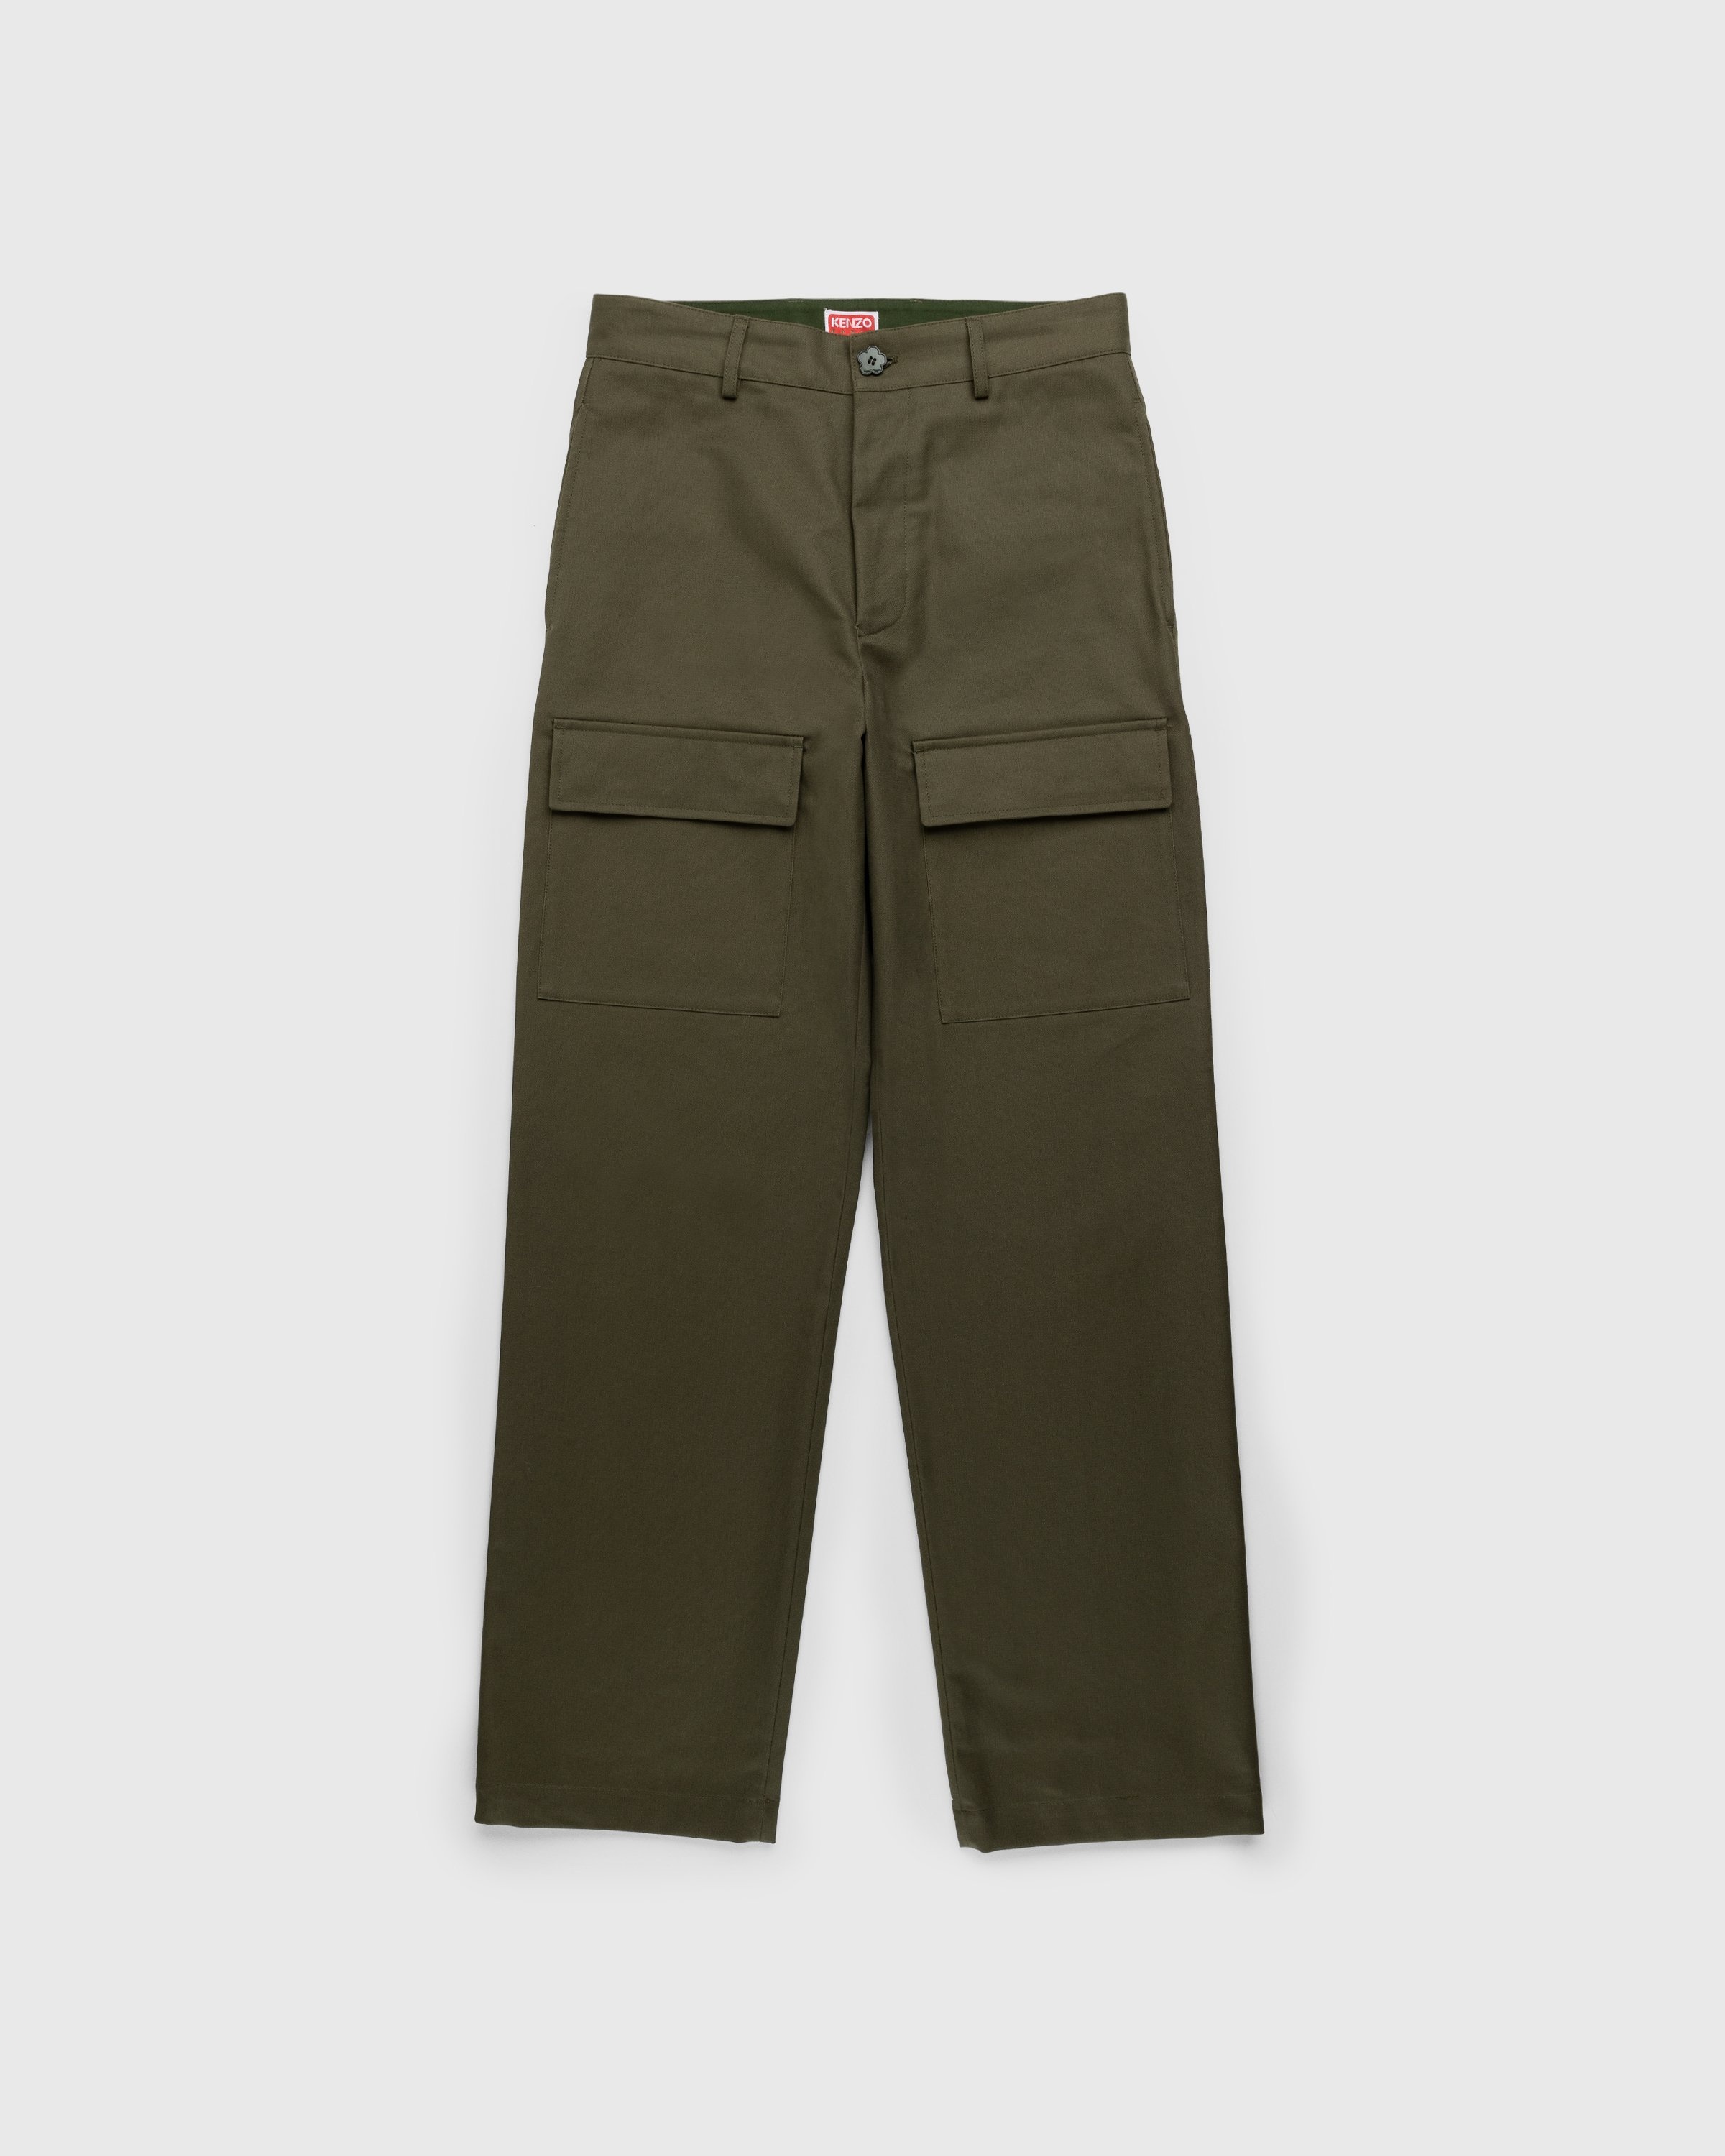 Kenzo – Tailored Pants Dark Khaki - Pants - Green - Image 1